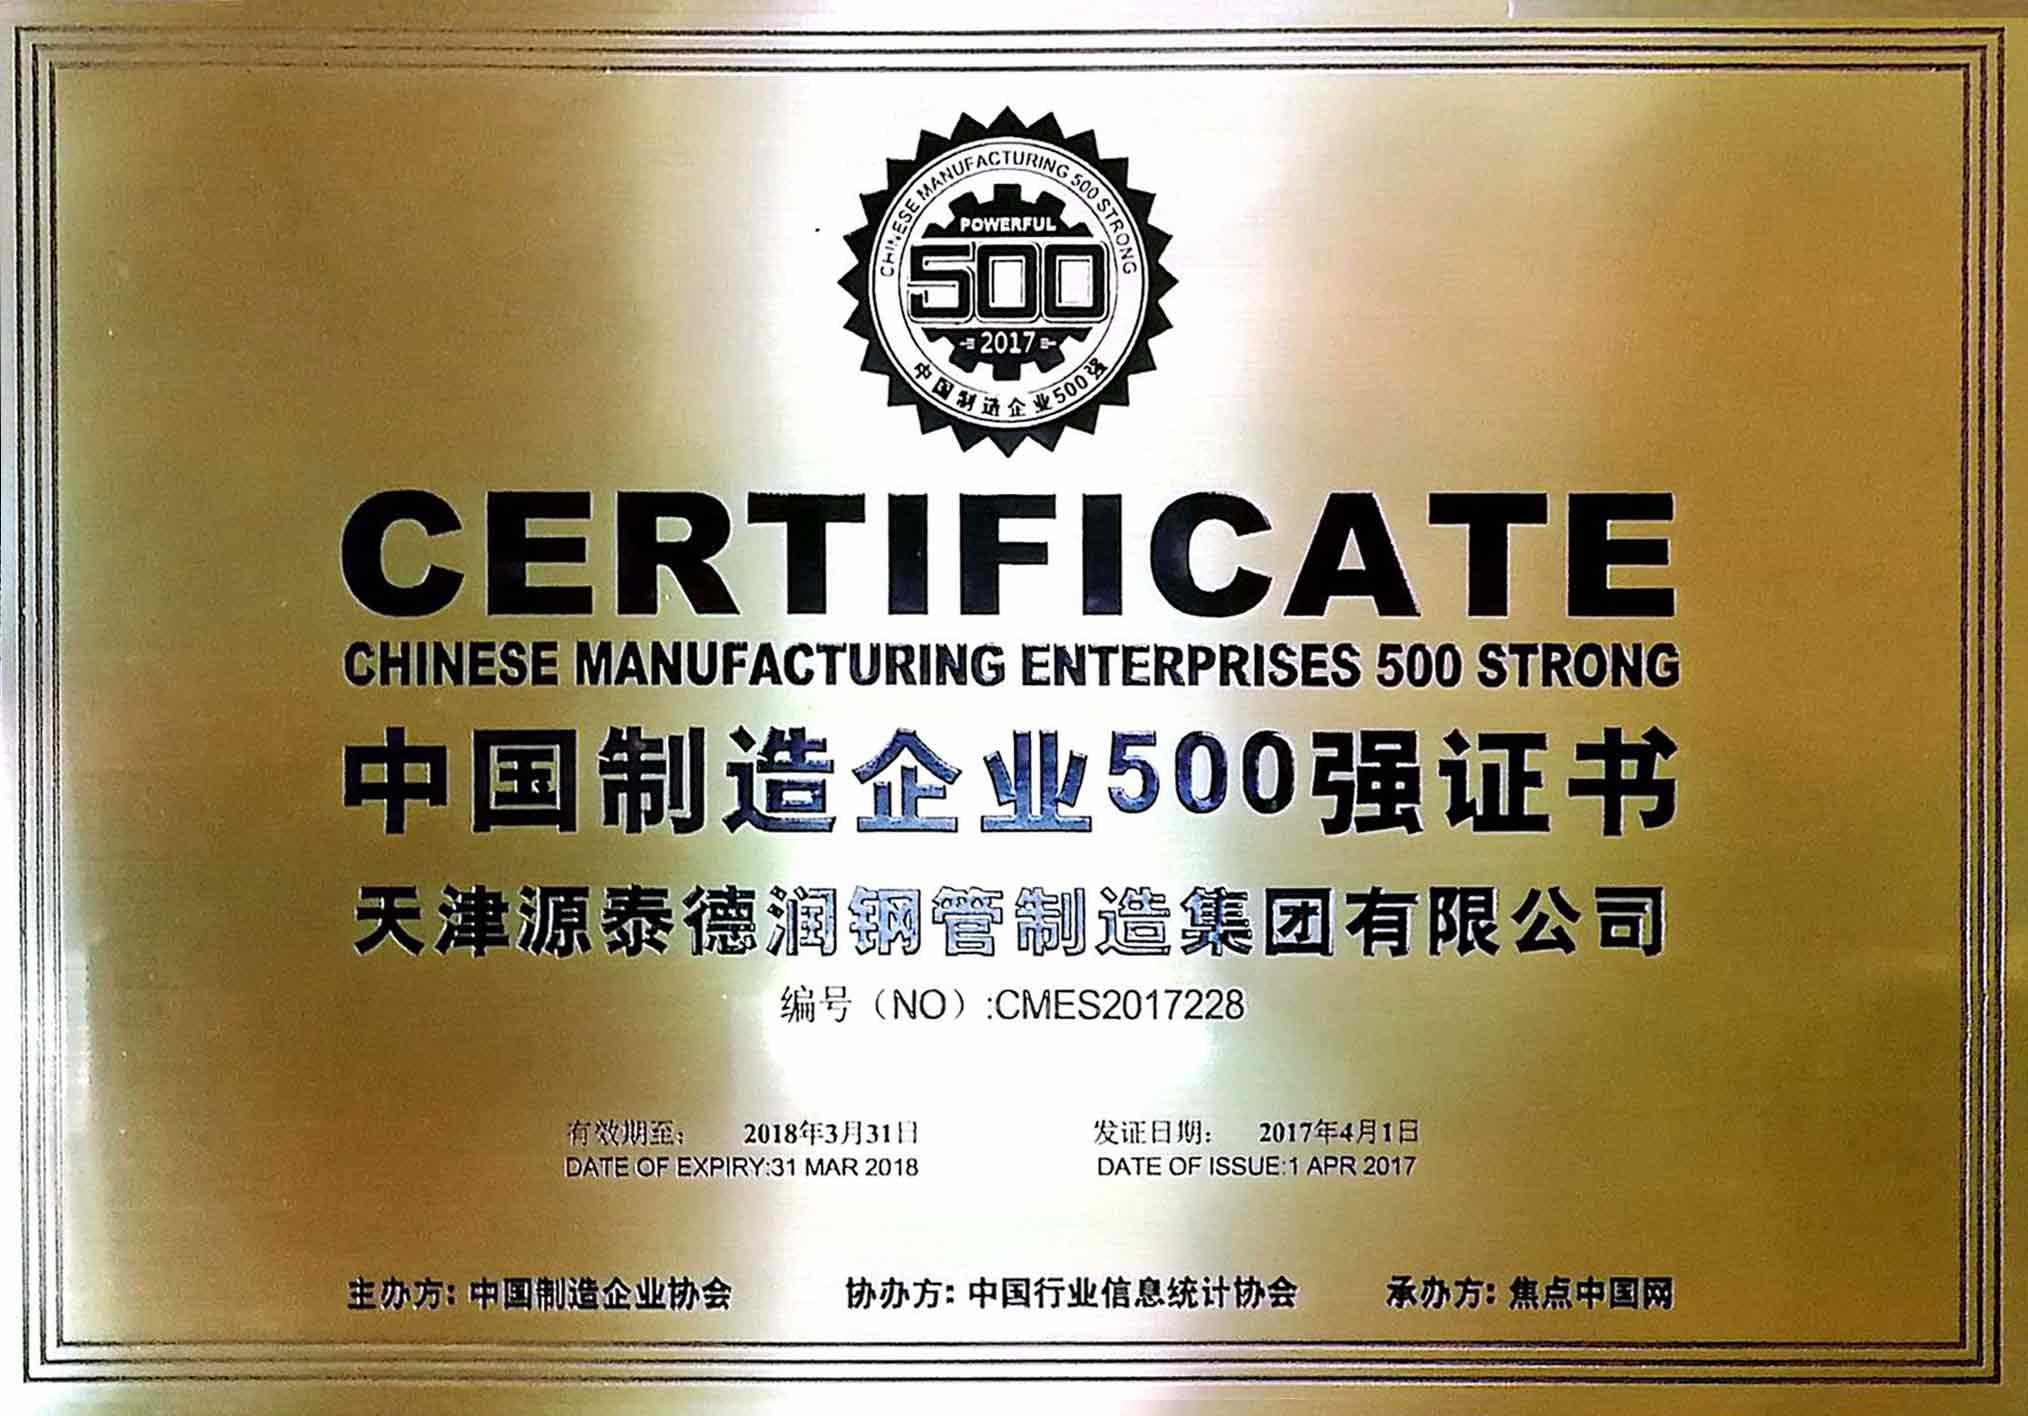 OMG! Čtvercový a obdélníkový podnik HWS vstupuje do TOP 500 ČÍNSKÝCH PRIVÁTNÍCH PODNIKŮ!